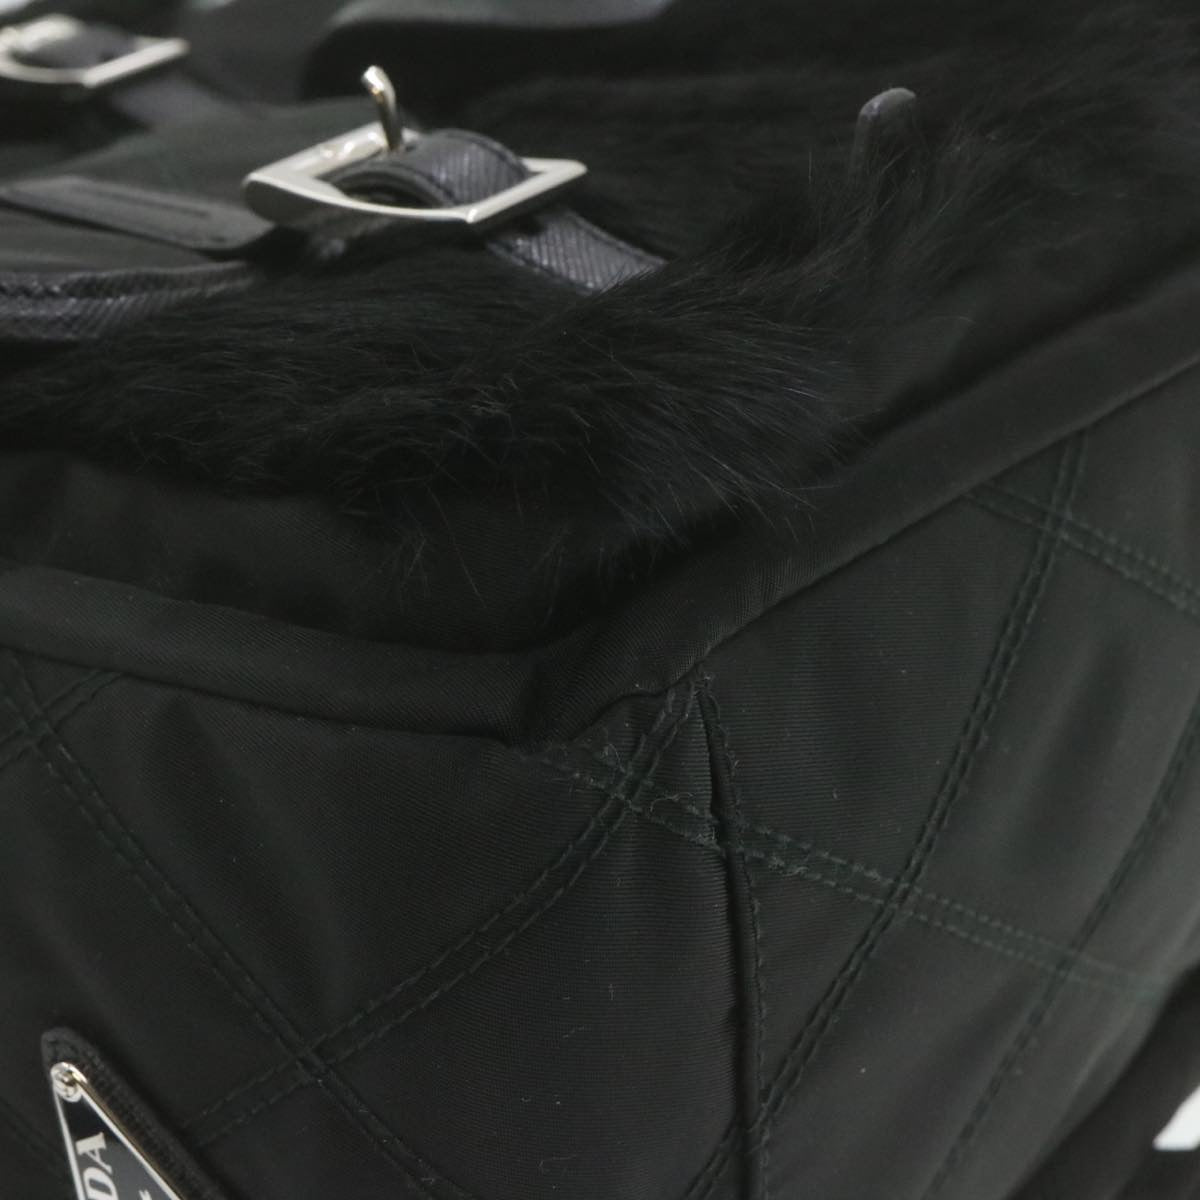 PRADA Nylon Fur Backpack Black 2VZ015 Auth 21454A